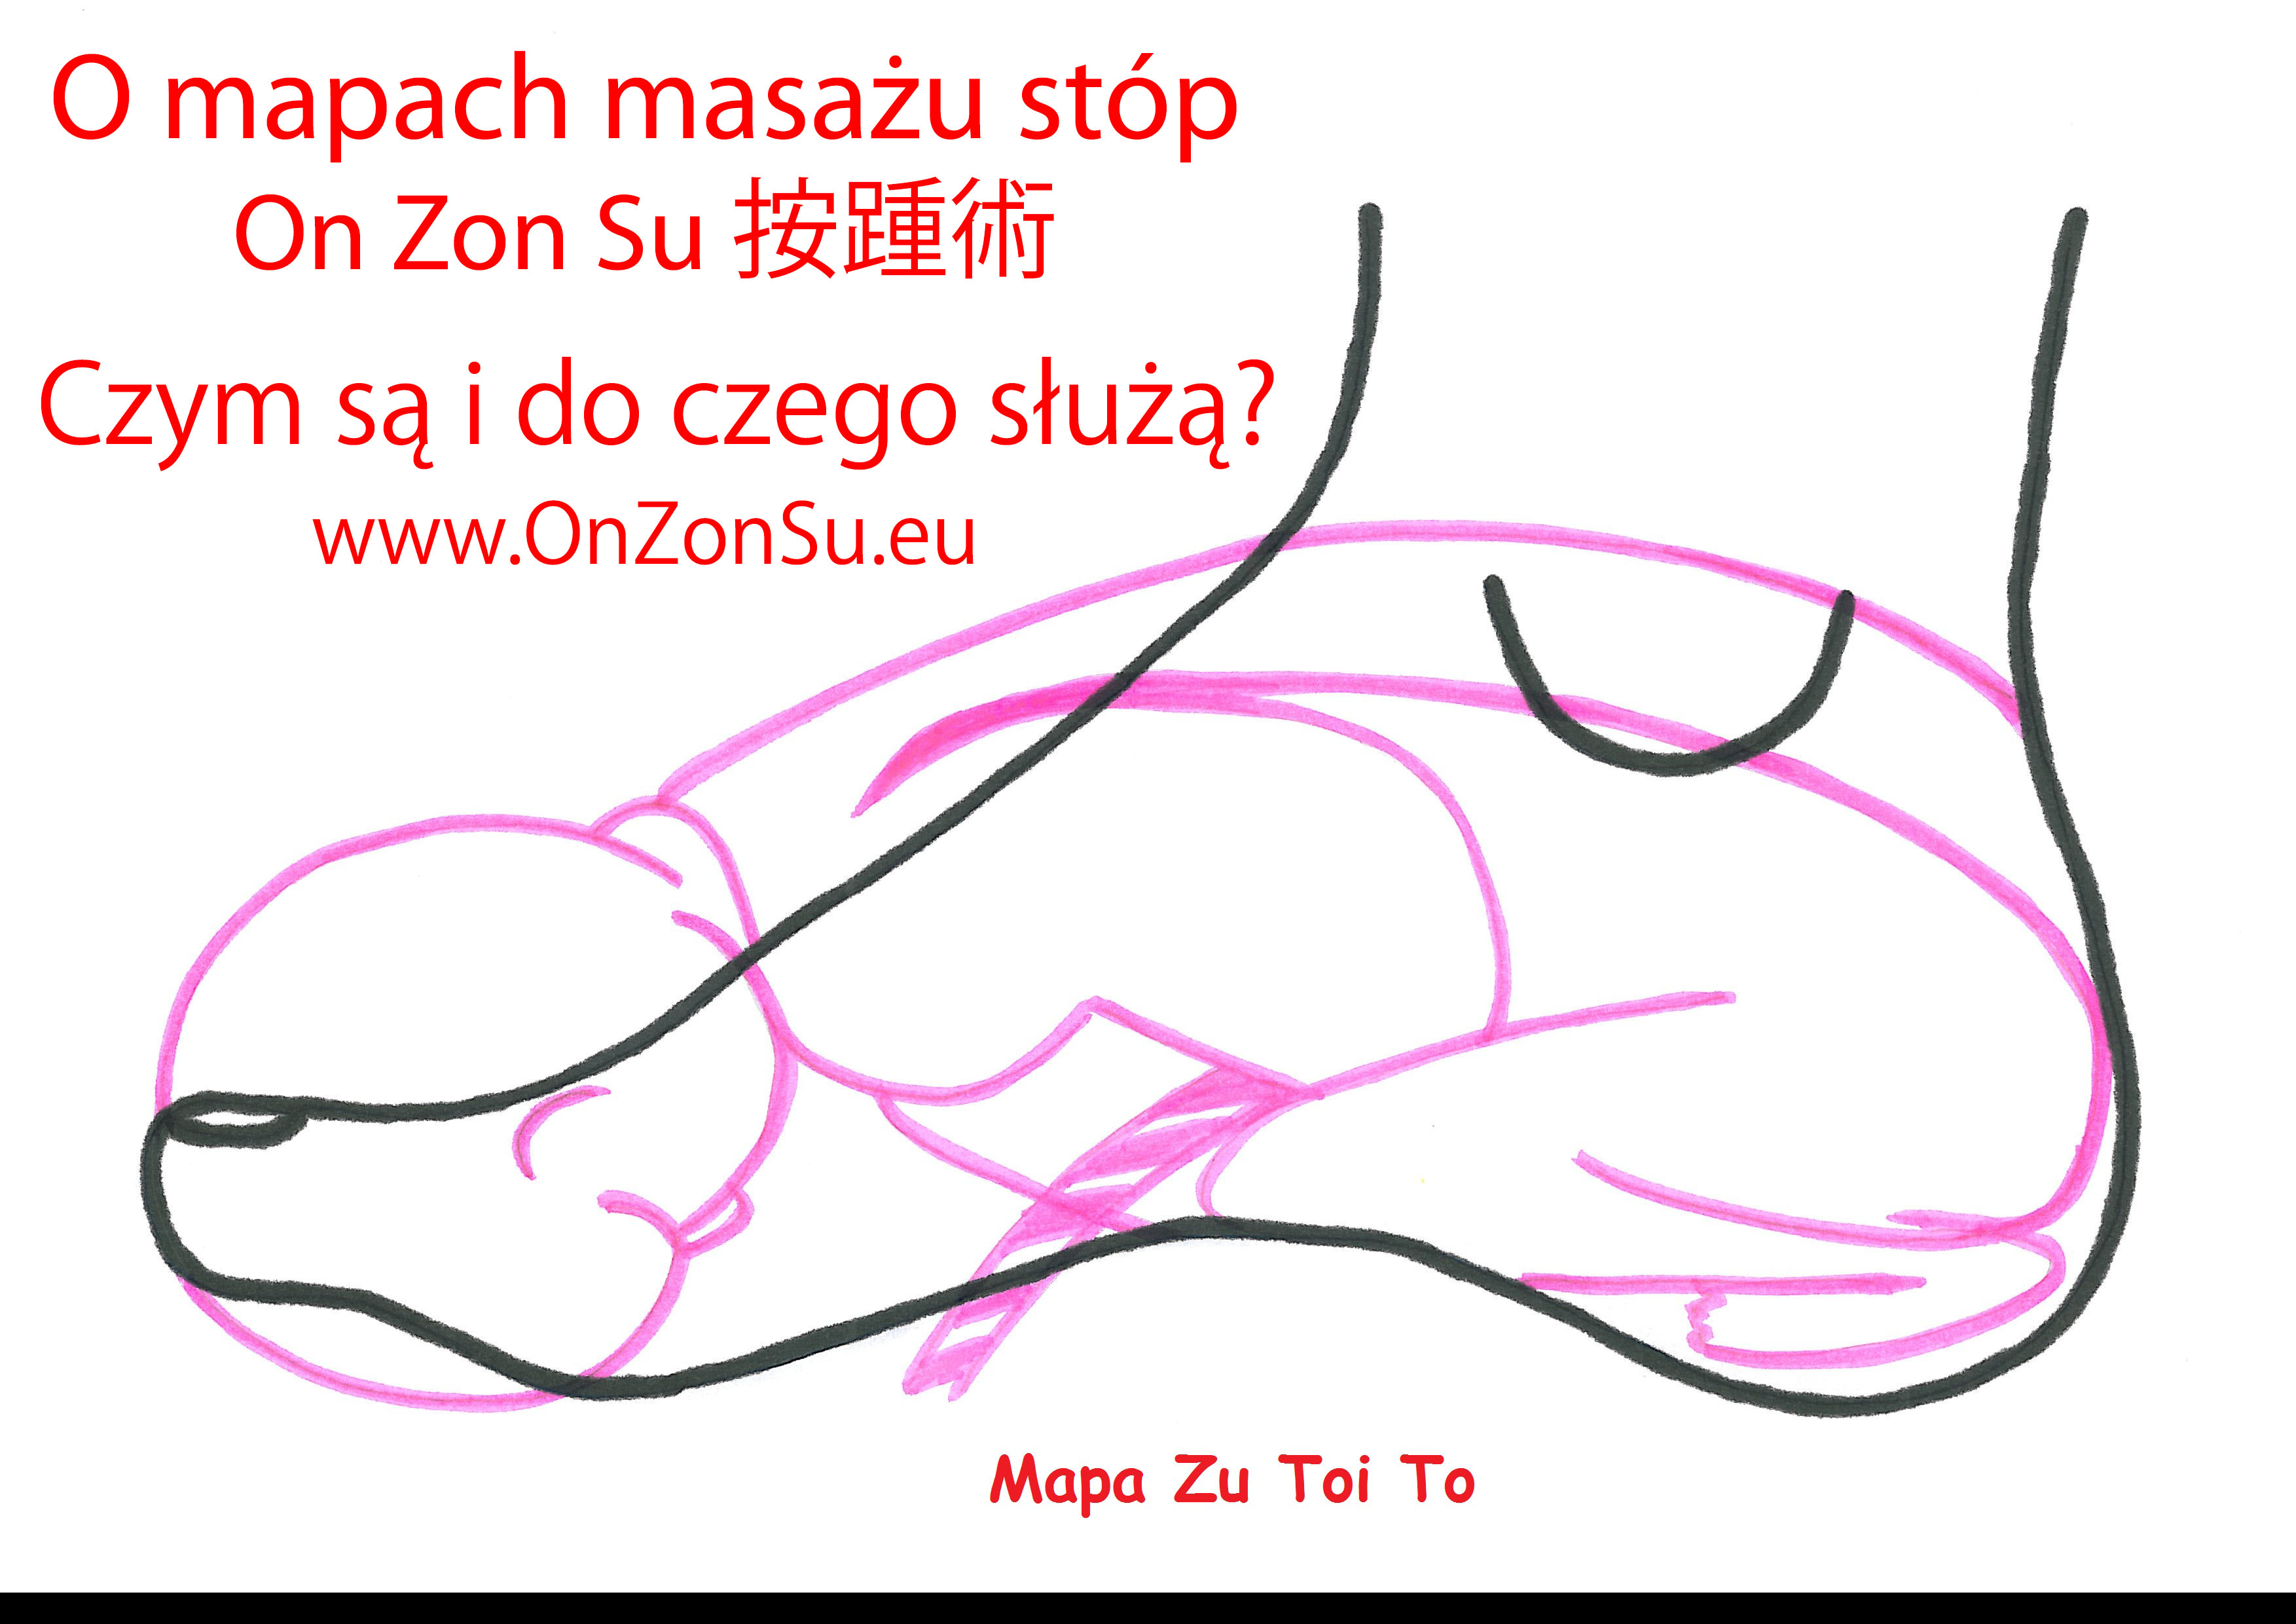 Kurs masażu stóp On Zon Su, Szkolenia refleksologii stóp - O mapach masażu stóp On Zon Su Mapa_Zu_Toi_To_MEM.jpg